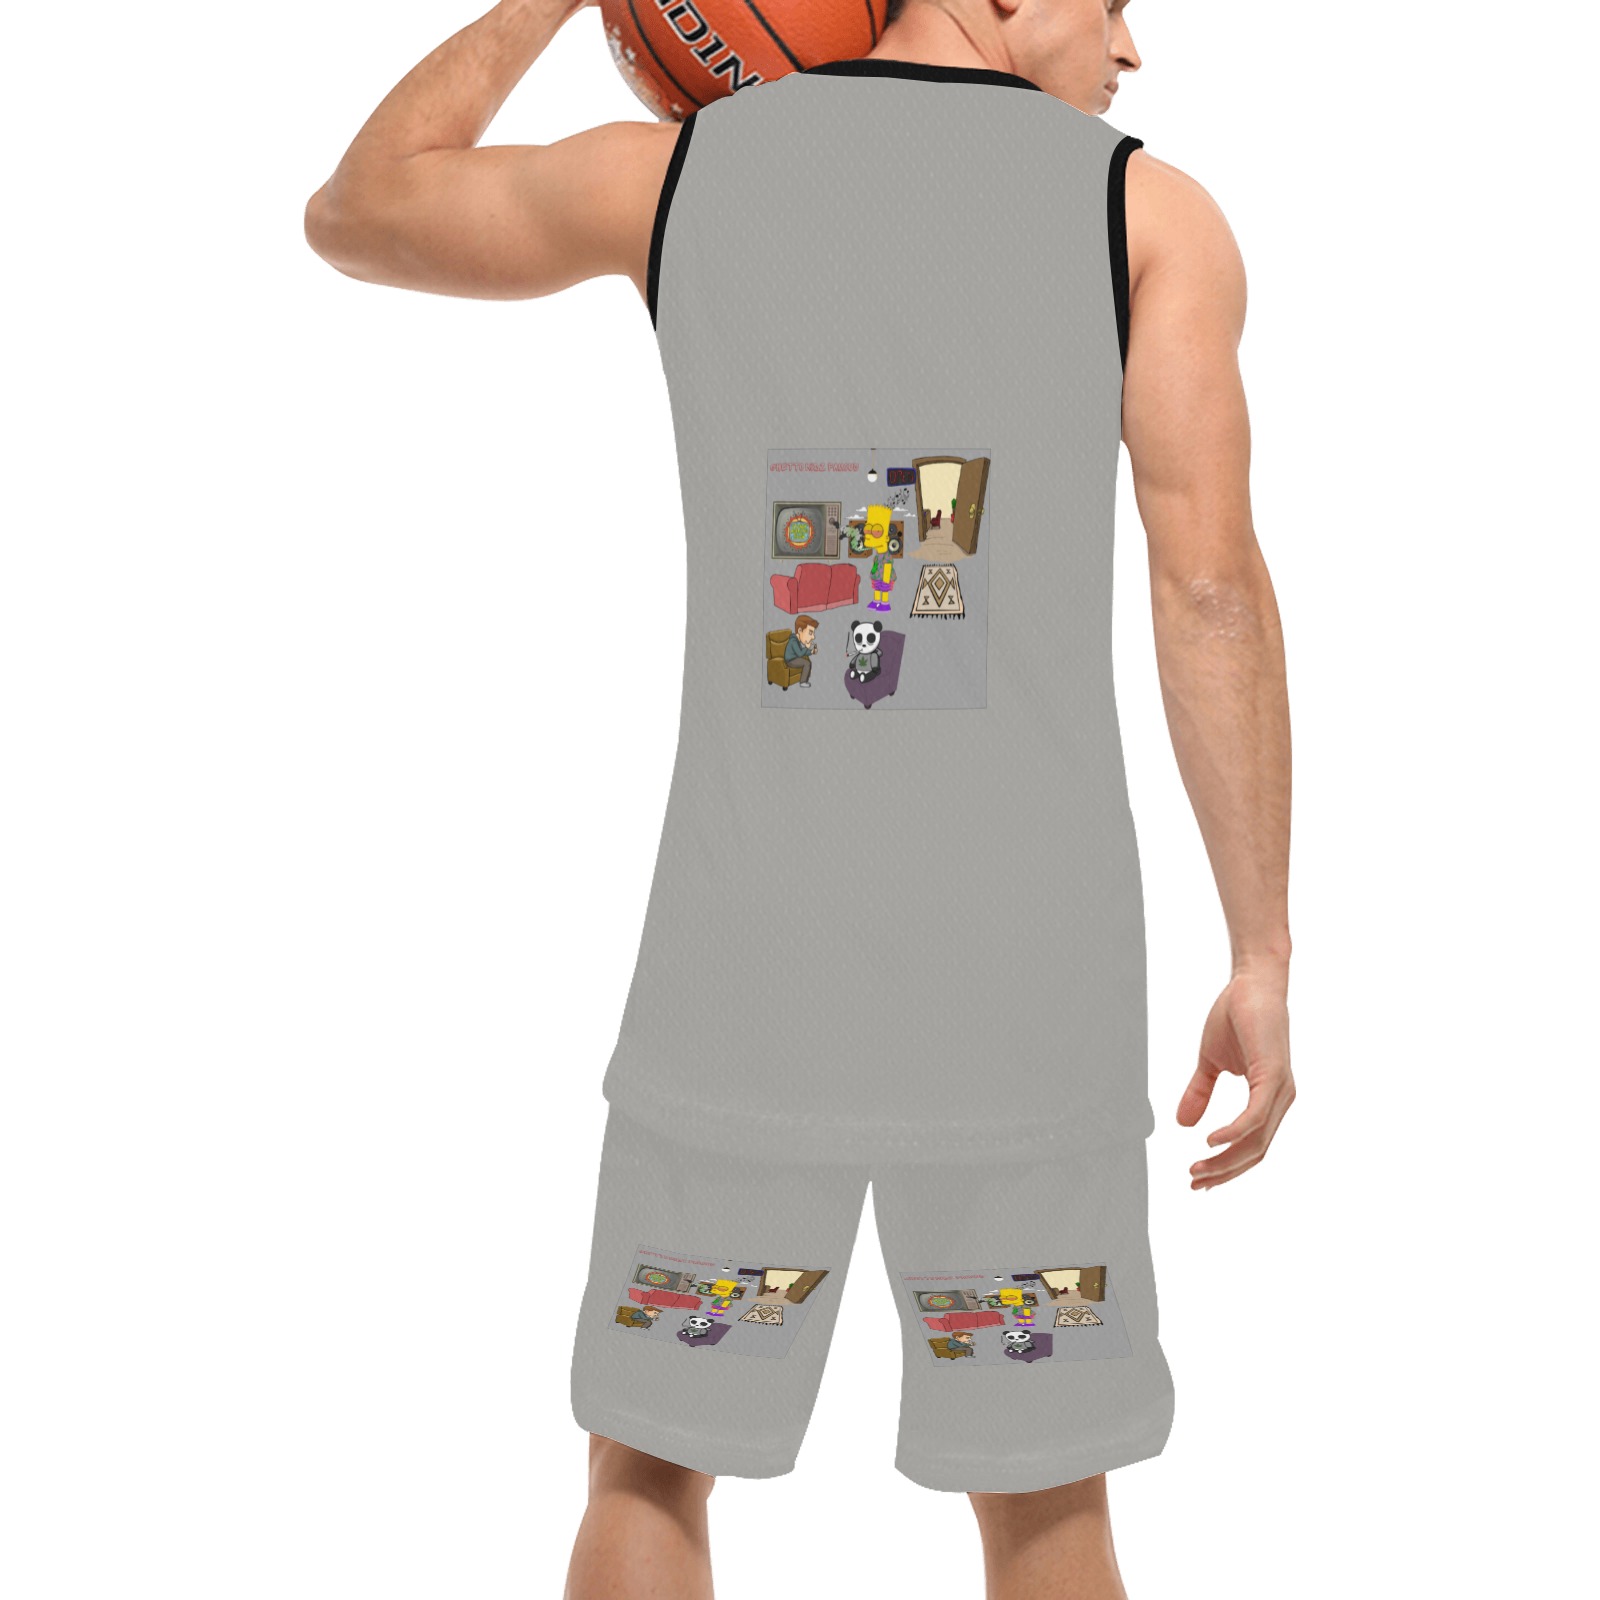 Ghetto Kidz Famous Basketball Uniform with Pocket